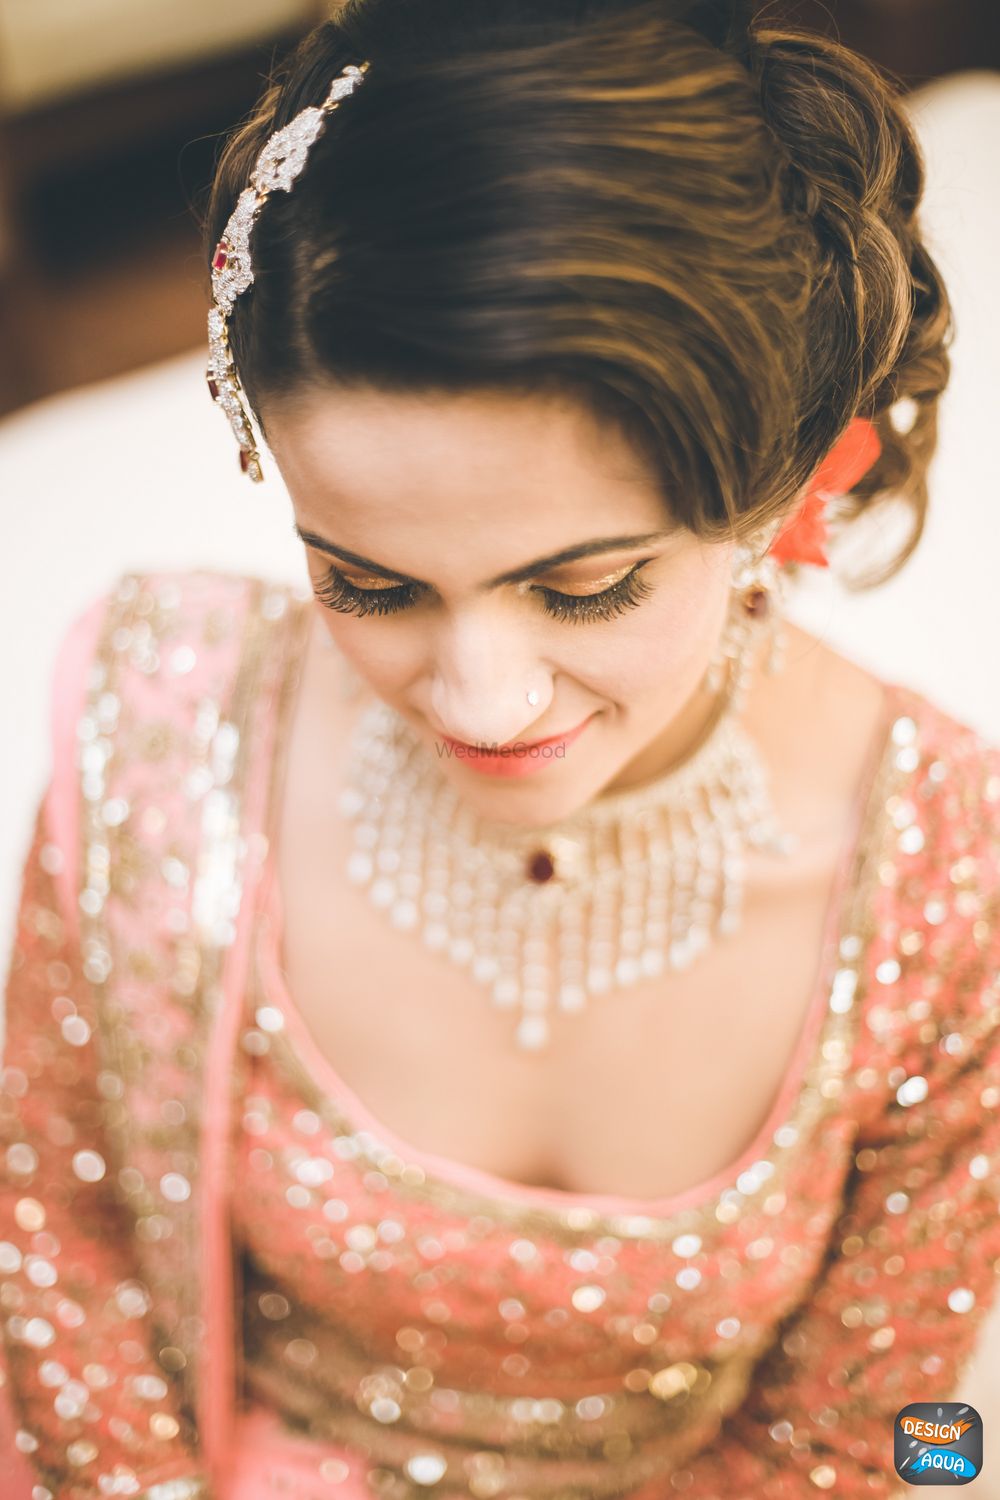 Photo of Bridal portrait with diamonds